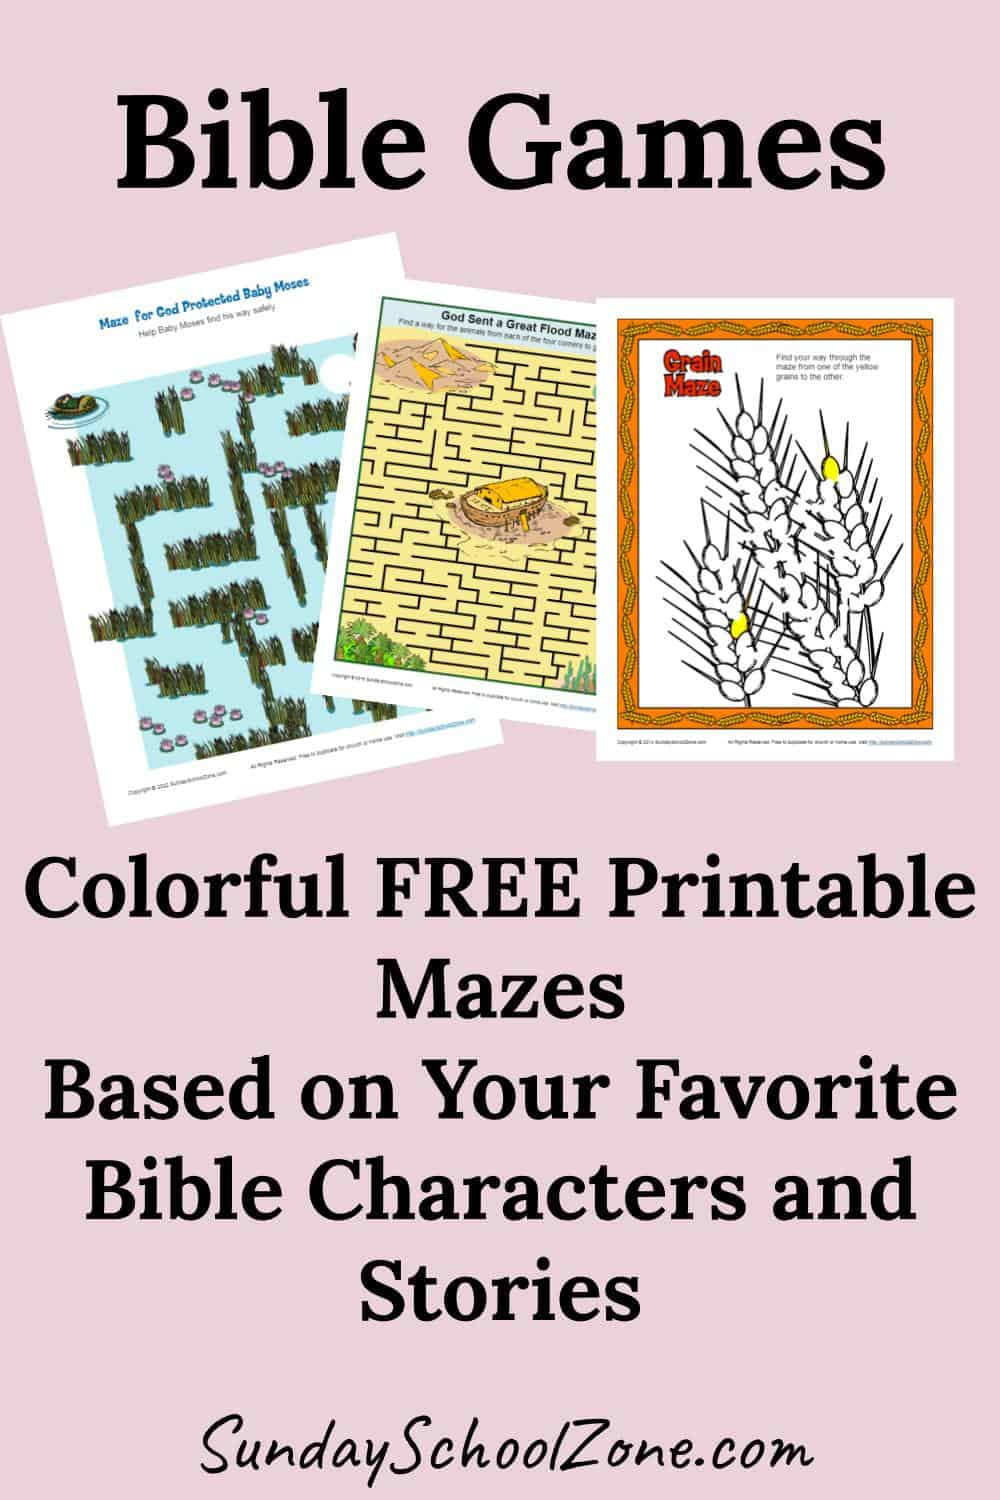 Free Bible Mazes For Children On Sunday School Zone - Free Printable Bible Mazes